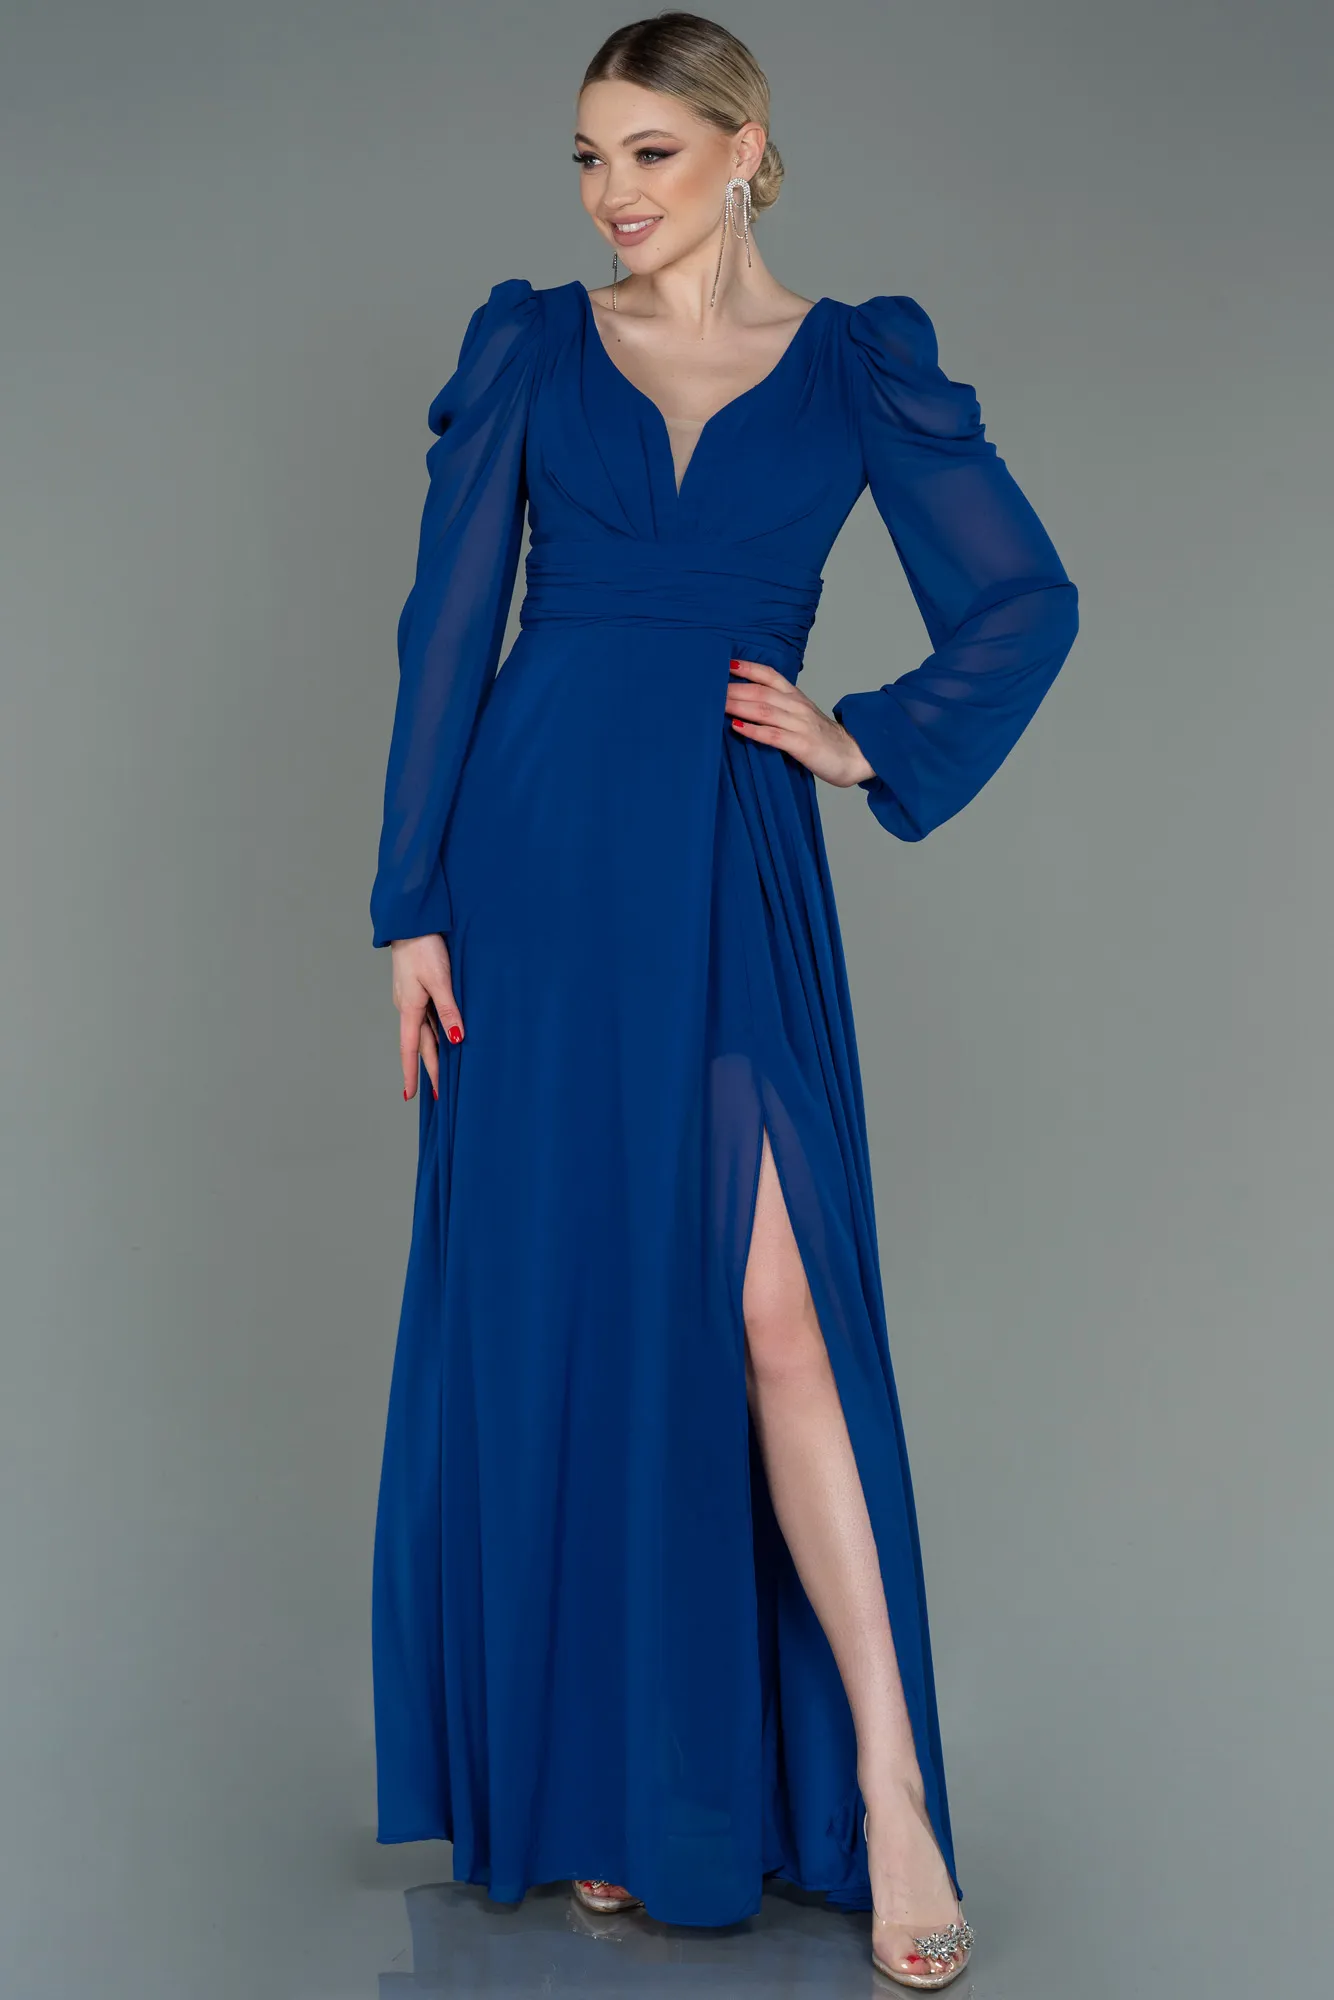 Sax Blue-Long Chiffon Evening Dress ABU3085